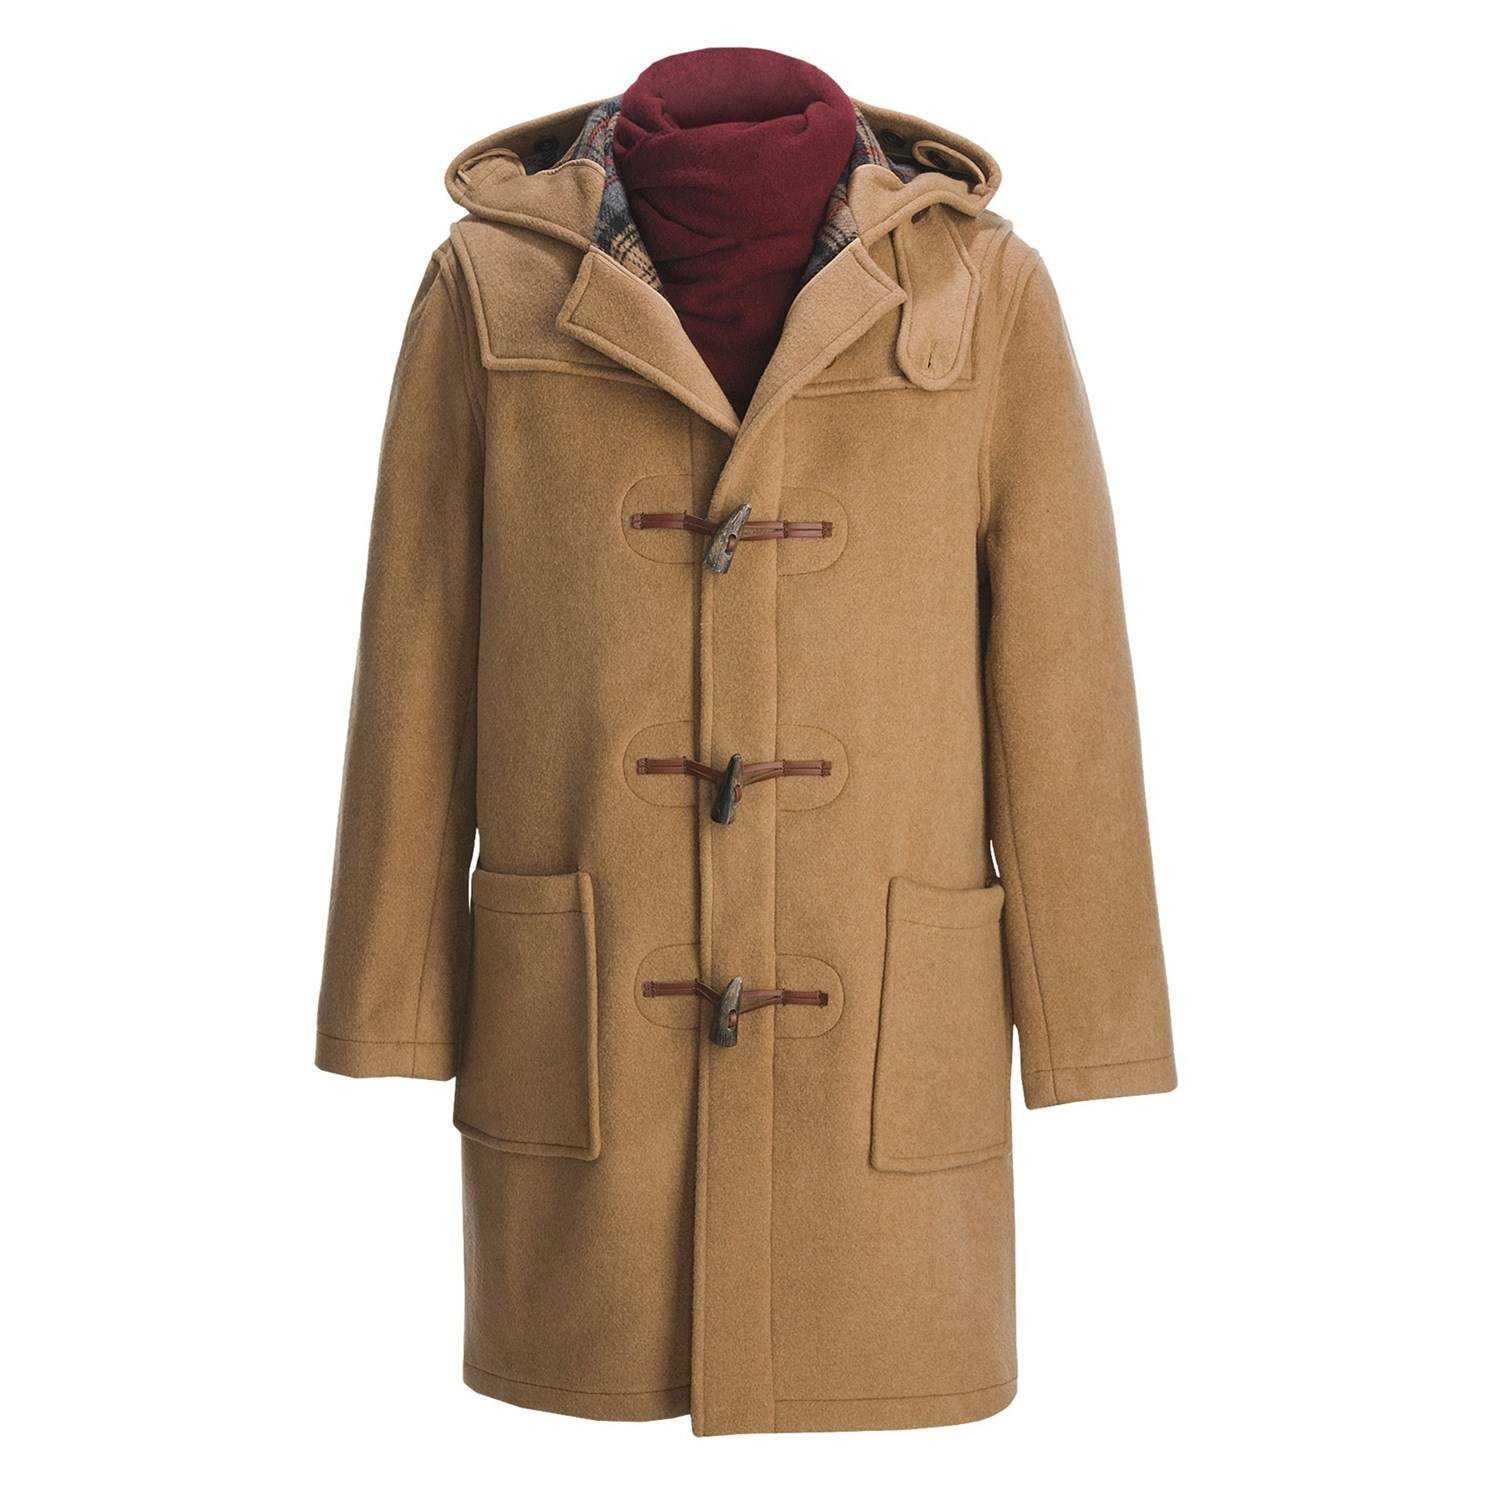 Как будет на английском пальто. Пальто John Partridge дафл. Пальто Duffle Coat. Пальто Trussardi дафлкот. Английское пальто дафлкот.